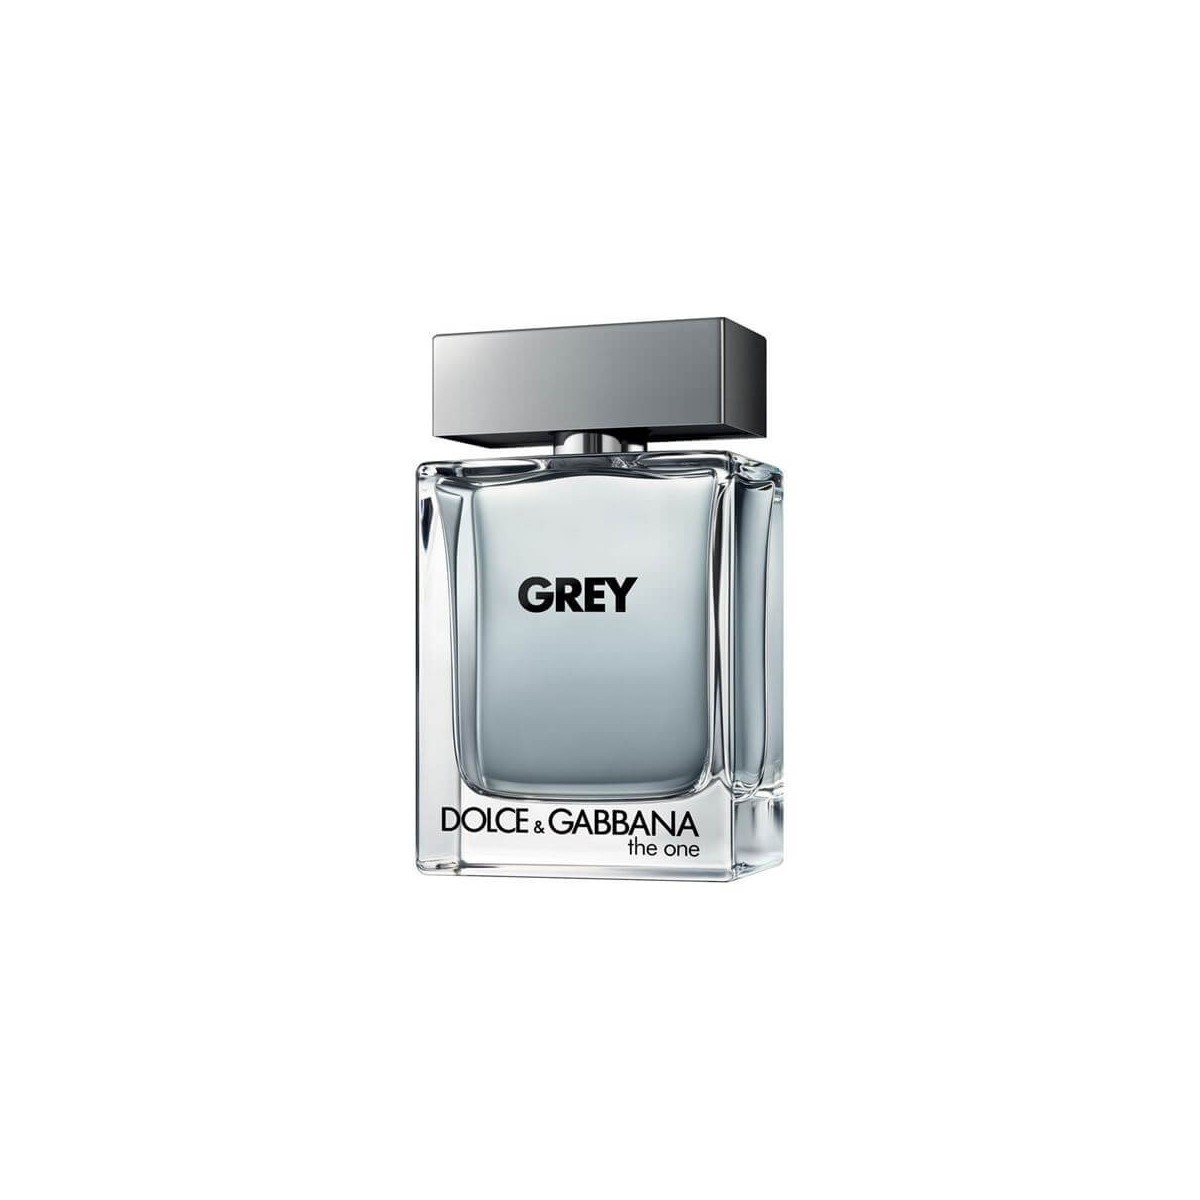 Dolce&Gabbana The One Grey Eau de Toilette Intense